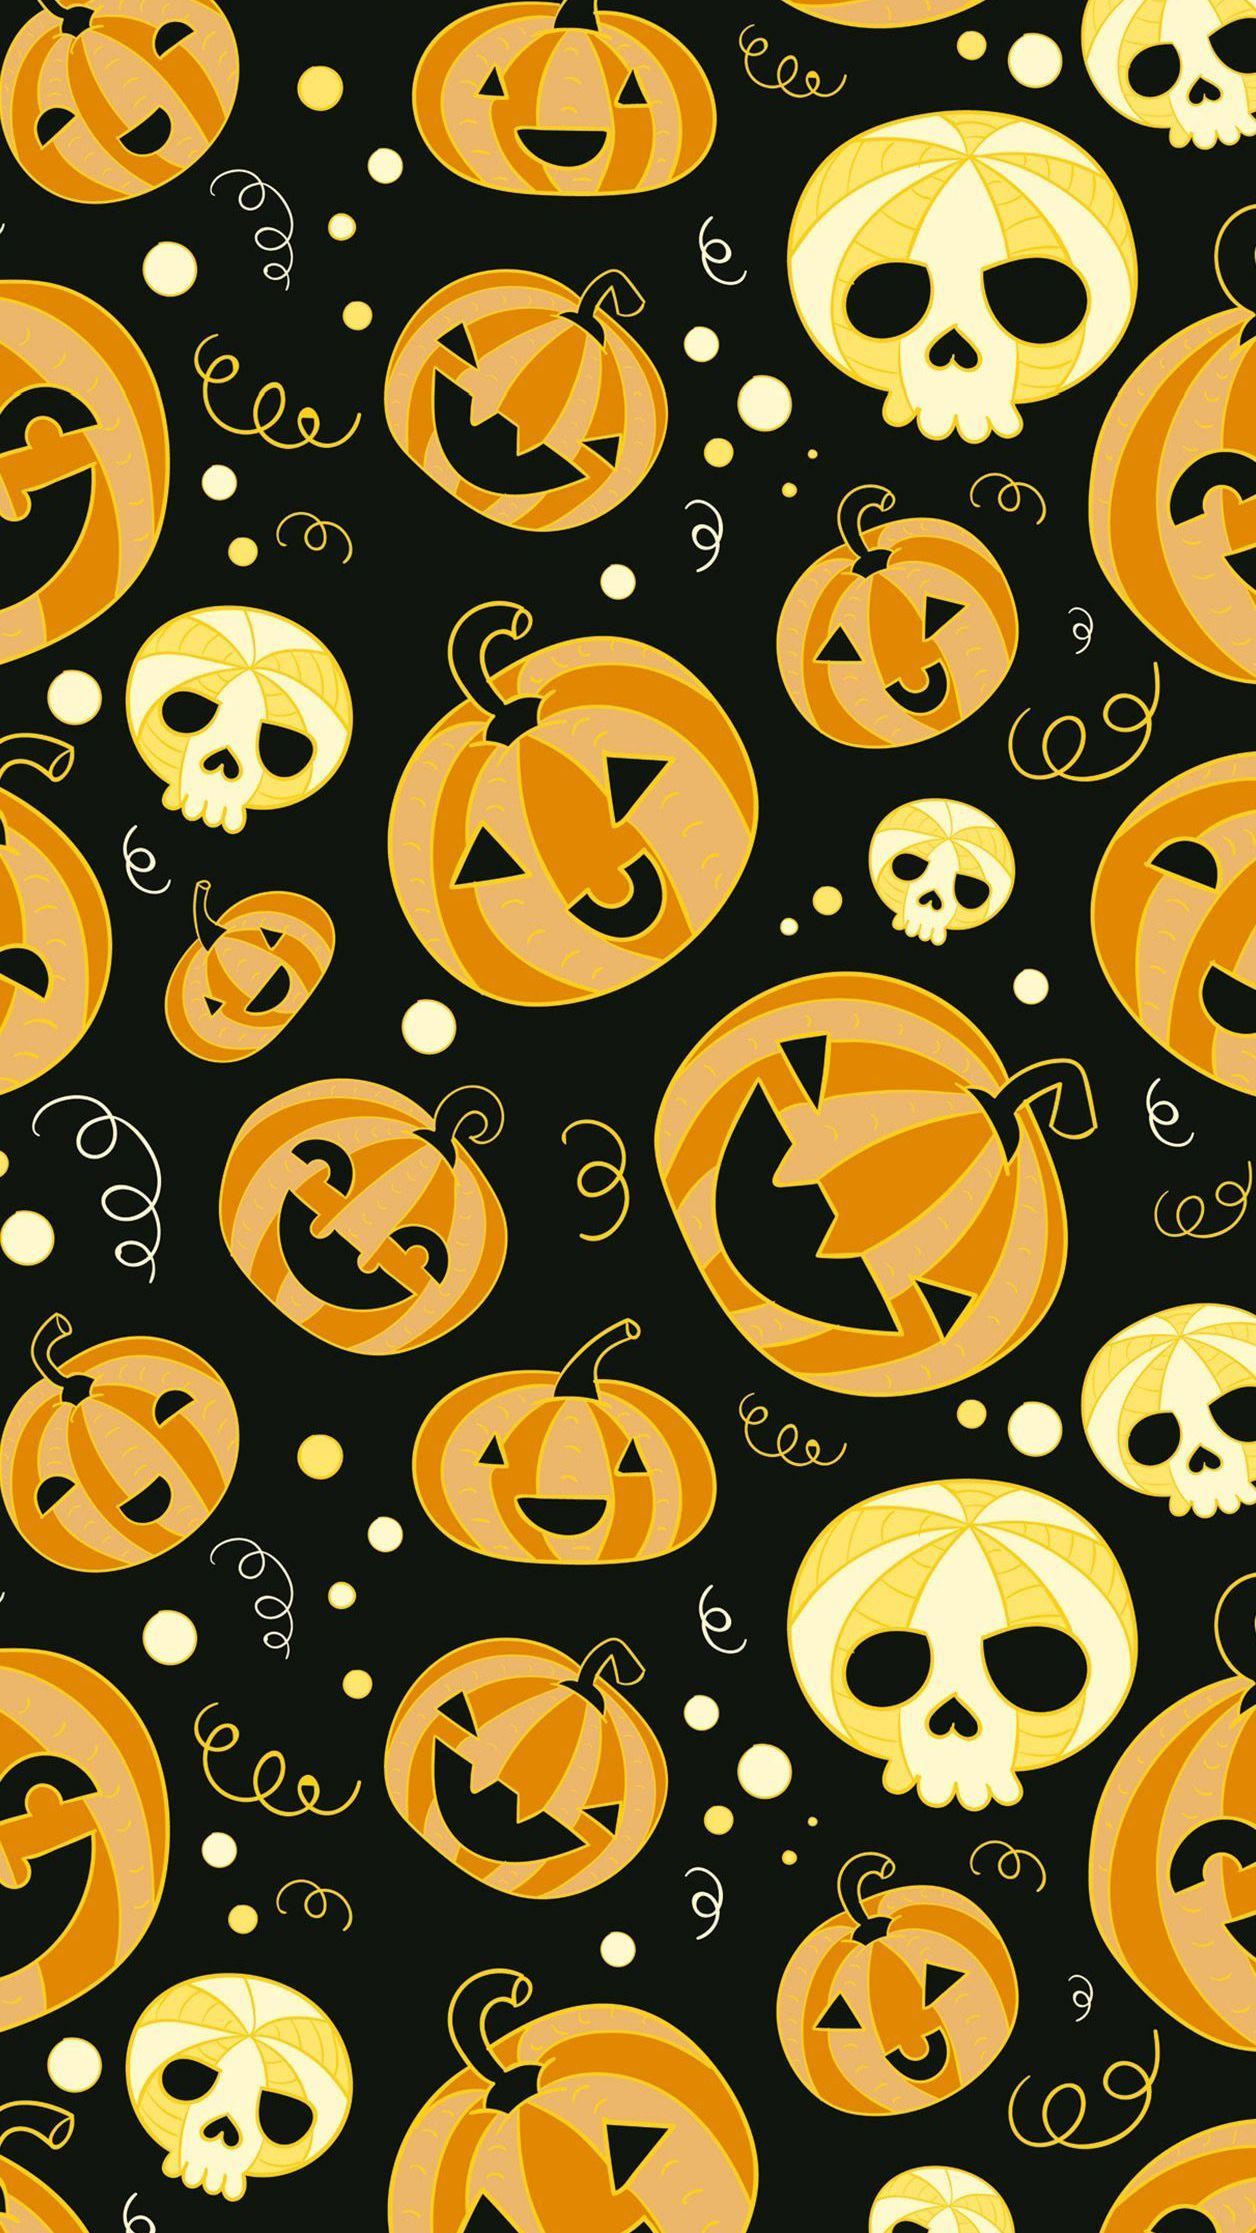 A pattern of pumpkins and skulls on black background - Halloween, cute Halloween